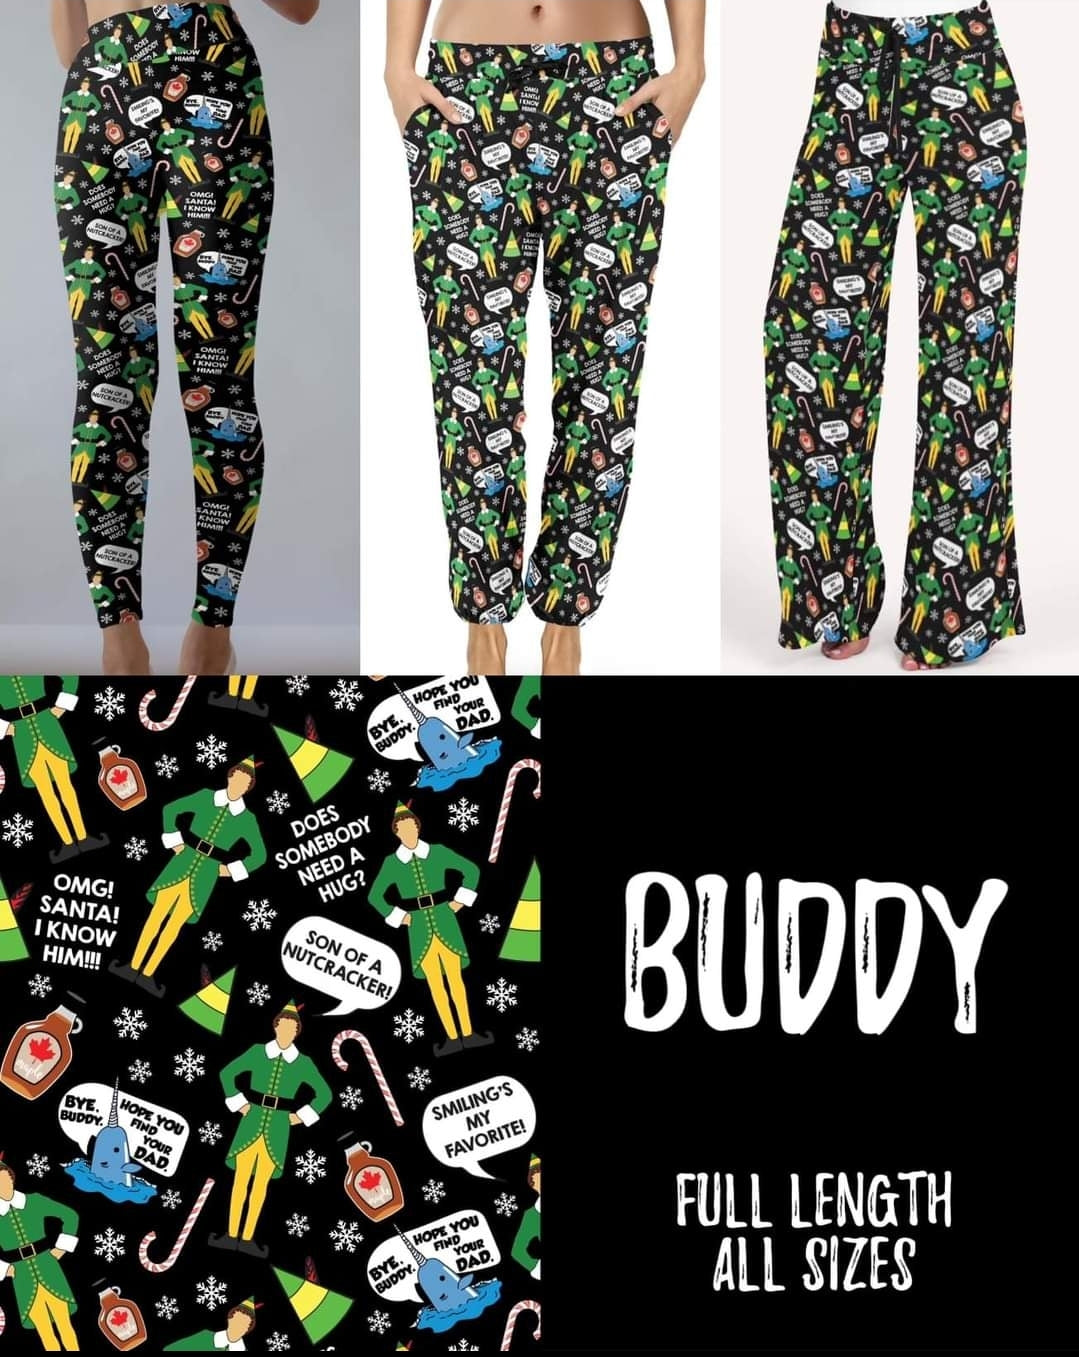 BUDDY leggings, joggers and lounge pants